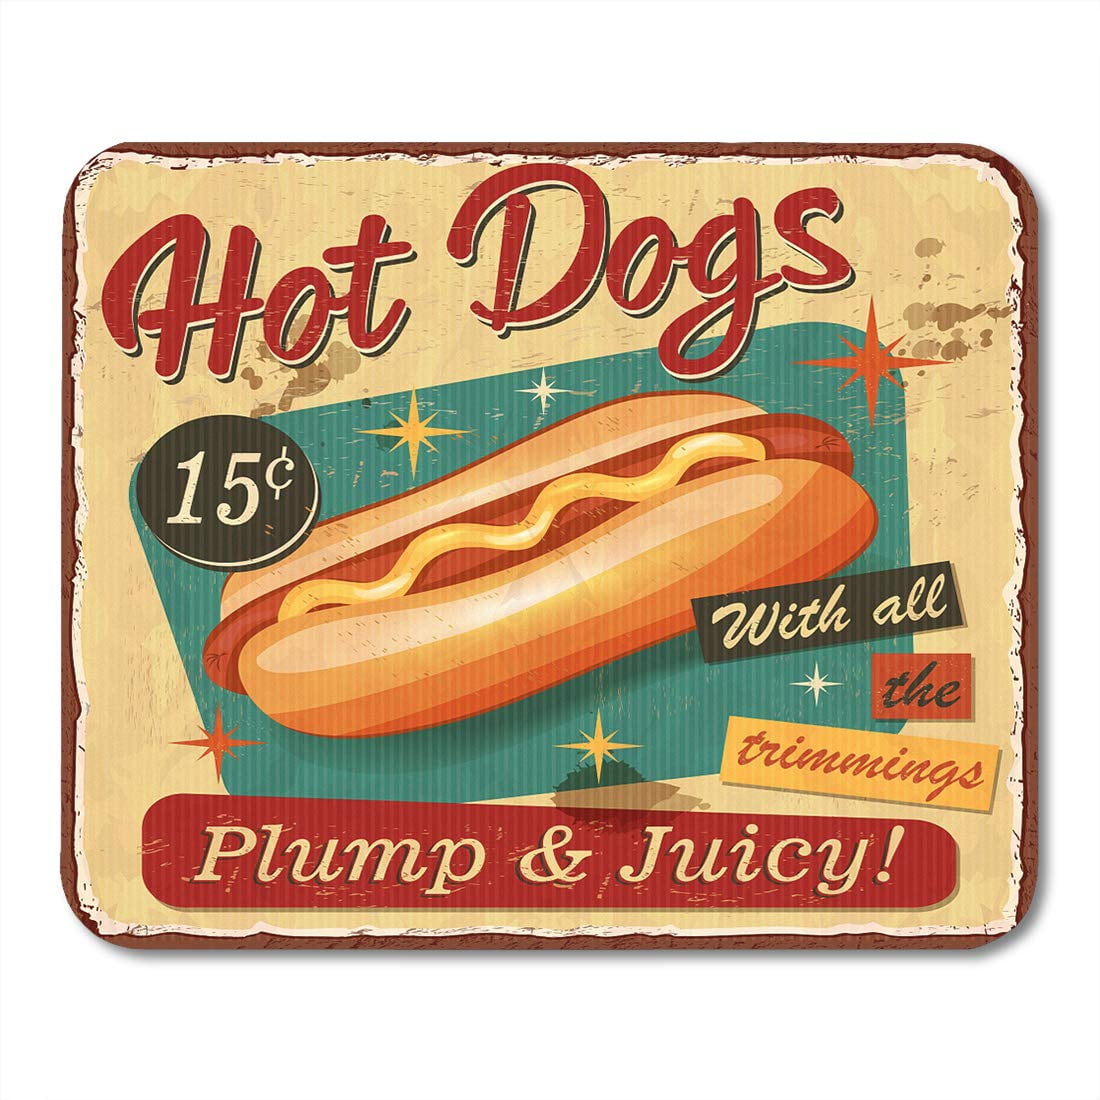 HOT DOGS Metal Signs 6"x12" Food & Beverage Retro Vintage Design Concession 